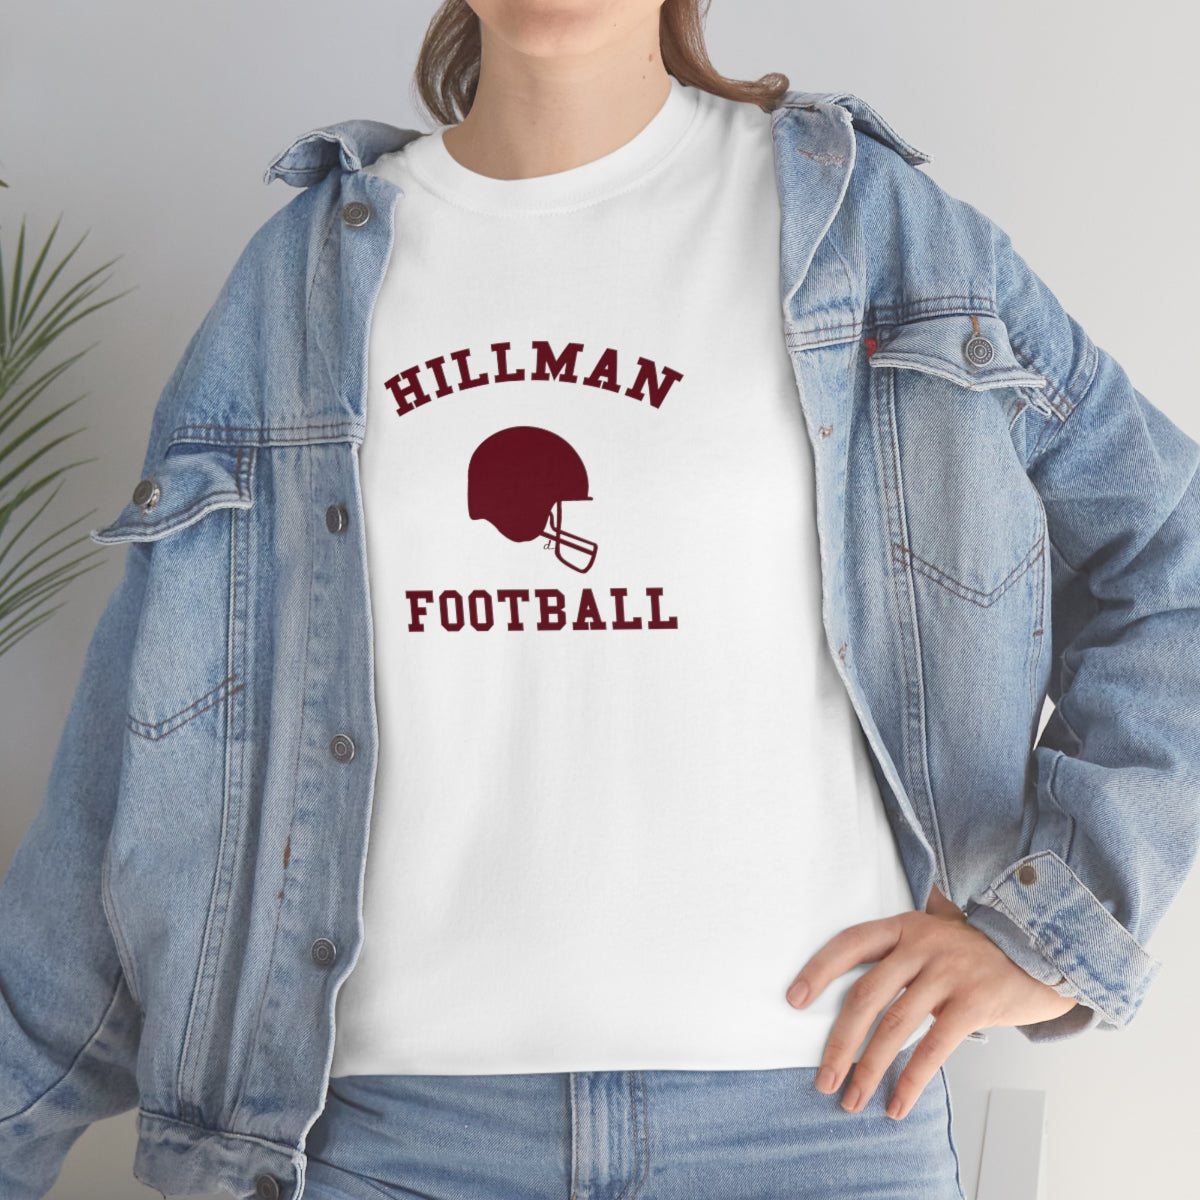 Hillman Football: Maroon Lettering Unisex Short Sleeve Tee